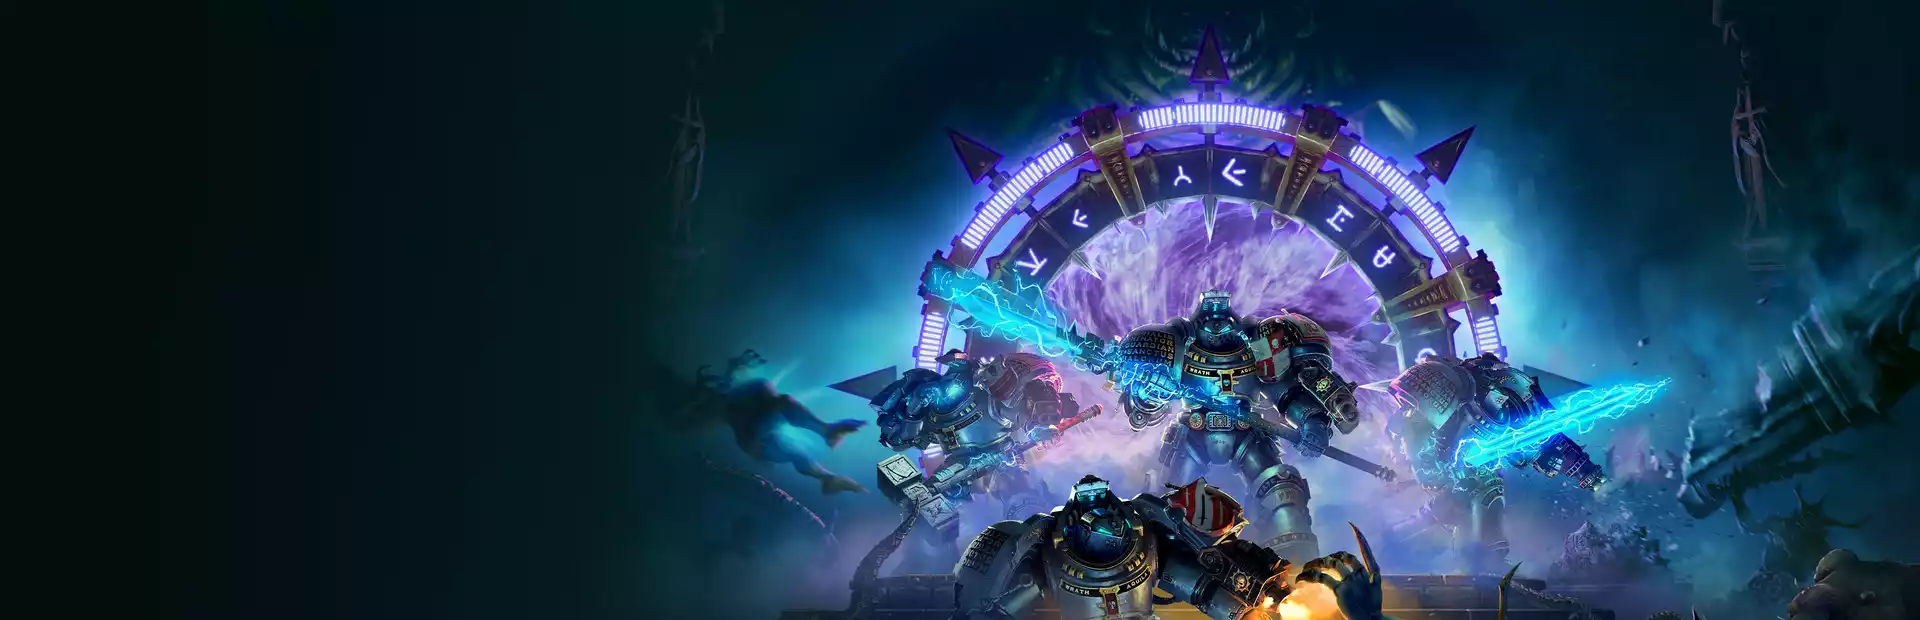 Warhammer 40,000: Chaos Gate Daemonhunters Steam Key China